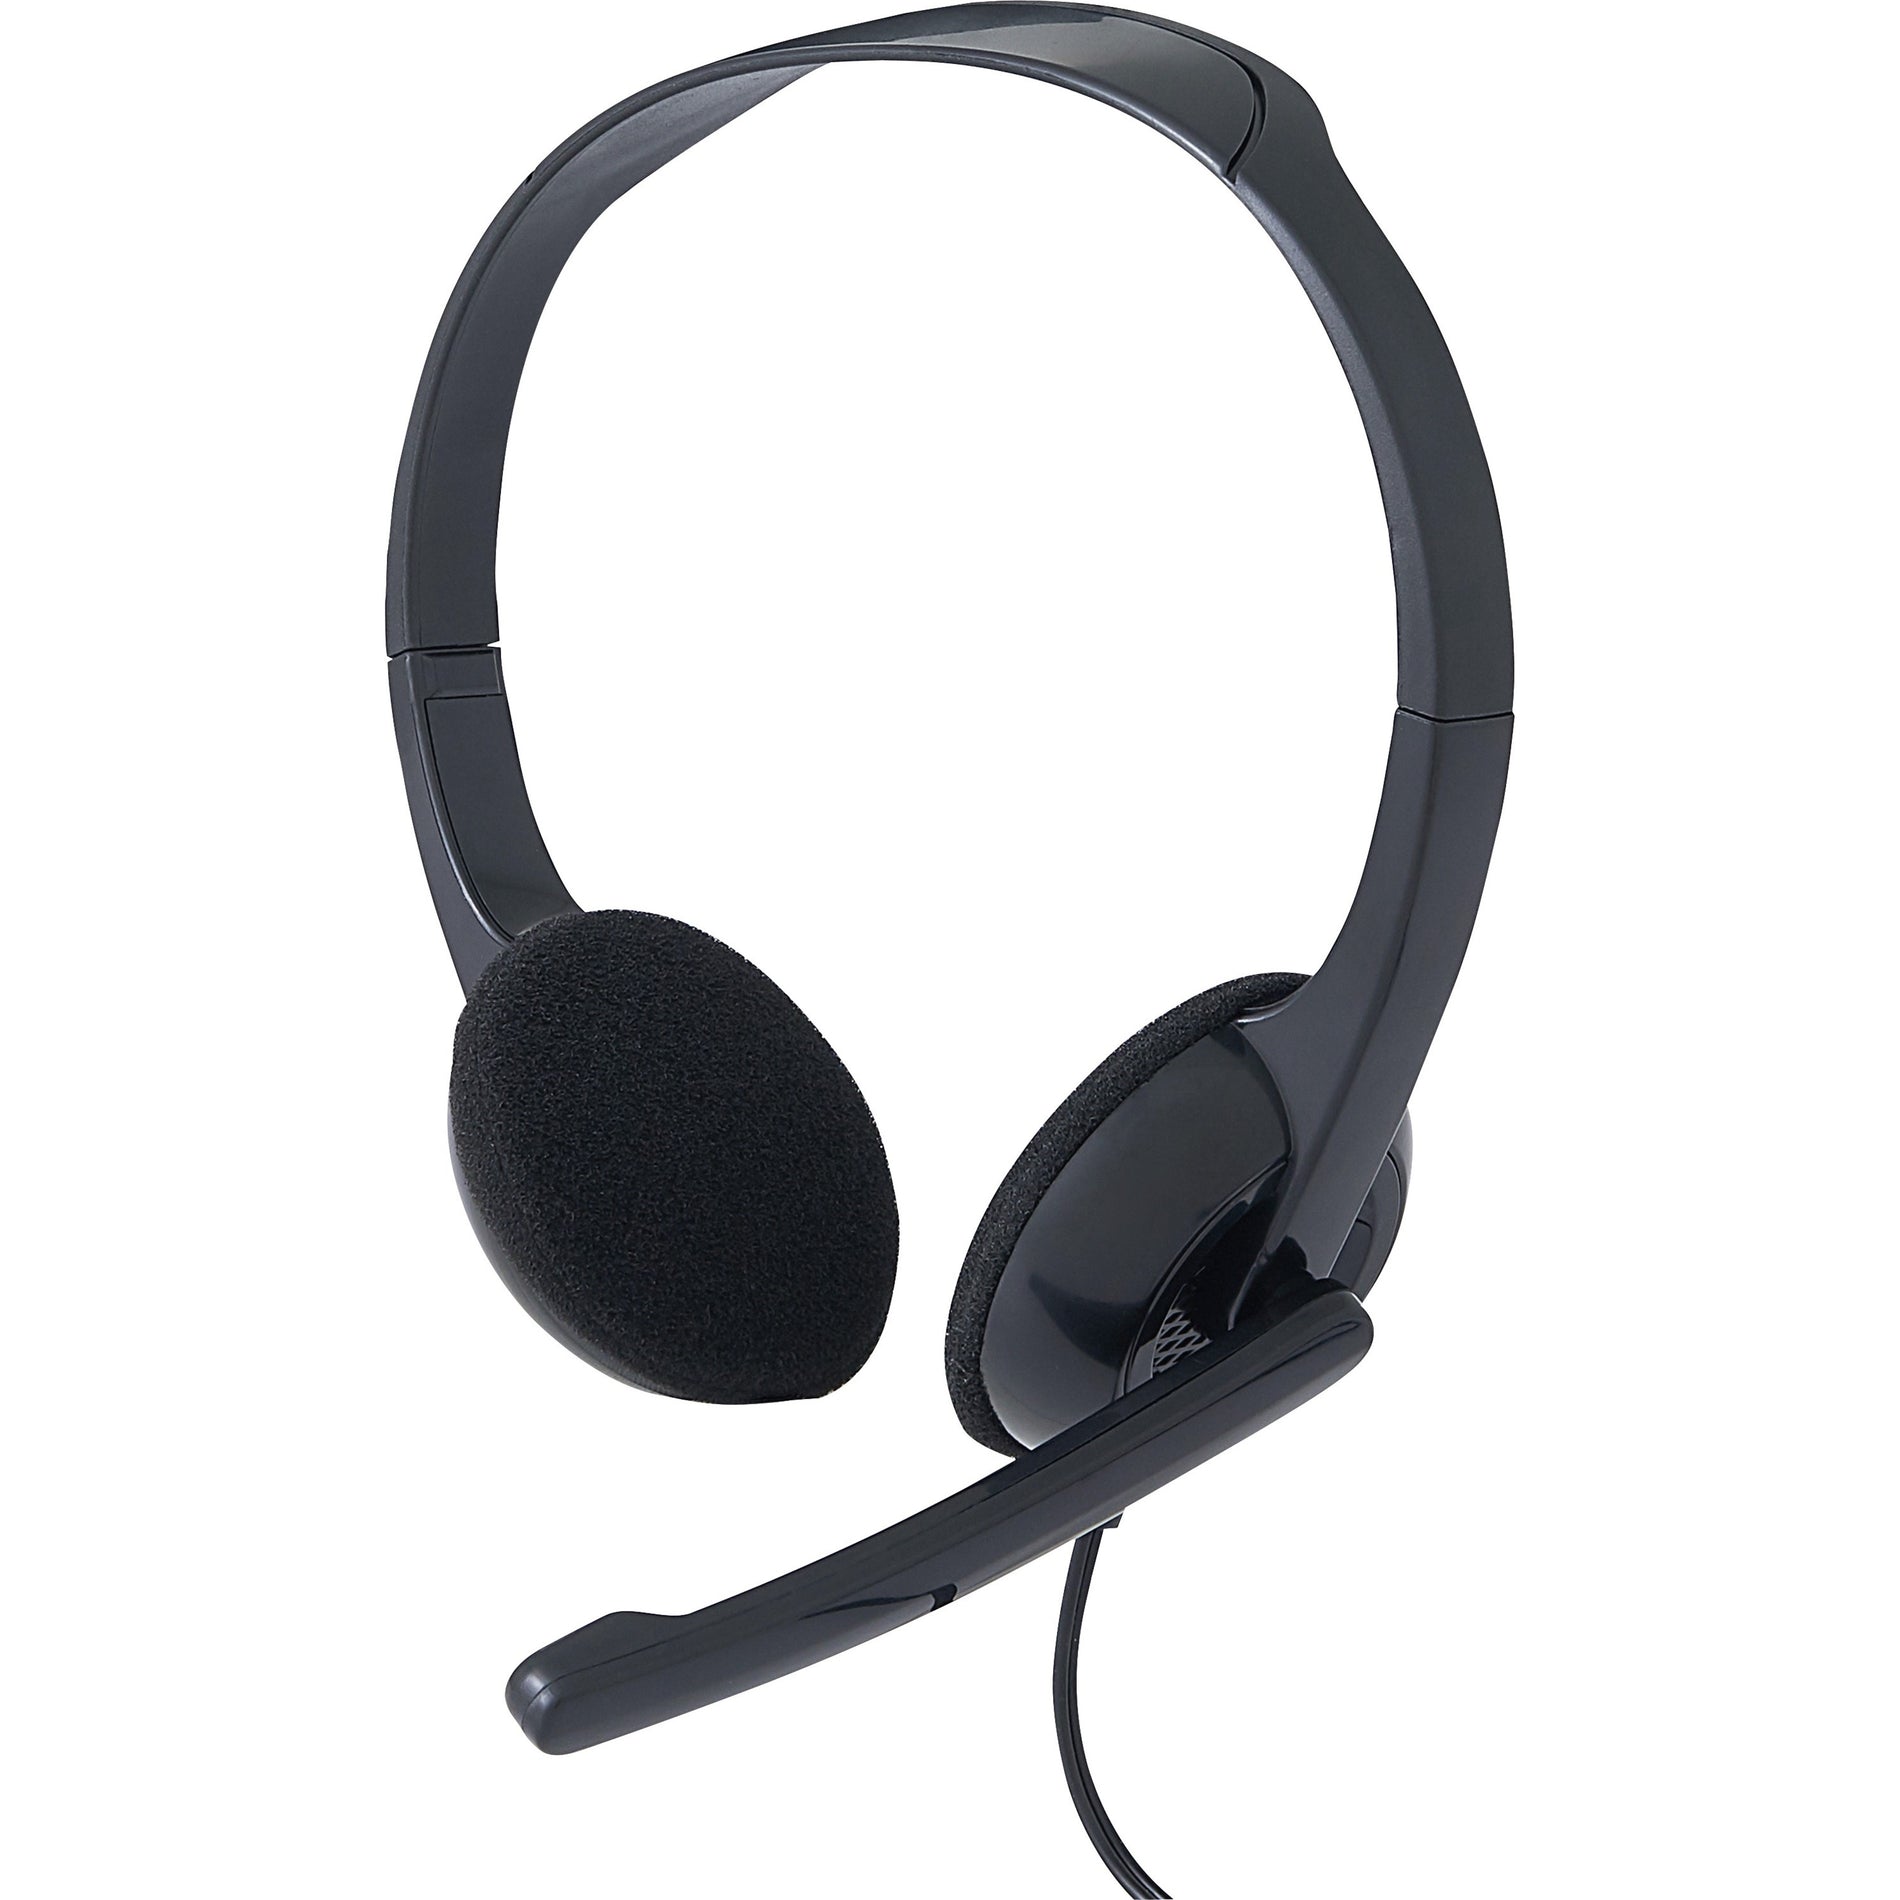 Verbatim 70721 Stereo Headset with Microphone, Adjustable Headband, Rotating Microphone, Plug and Play, Comfortable, Ergonomic Design